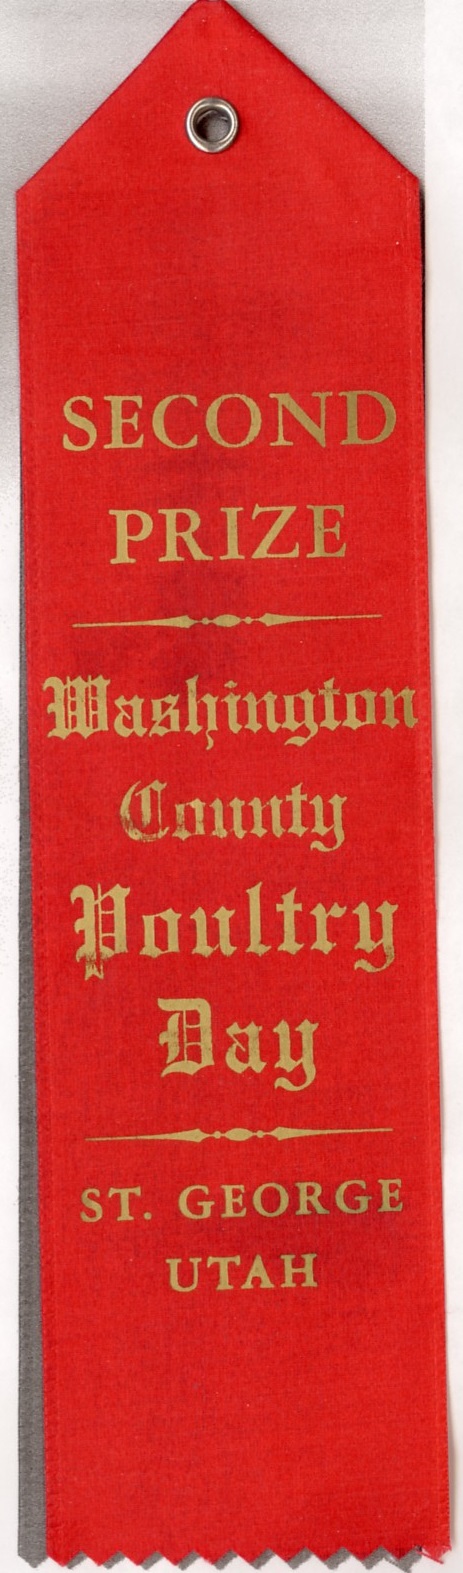 Washington County Poultry Day Ribbon